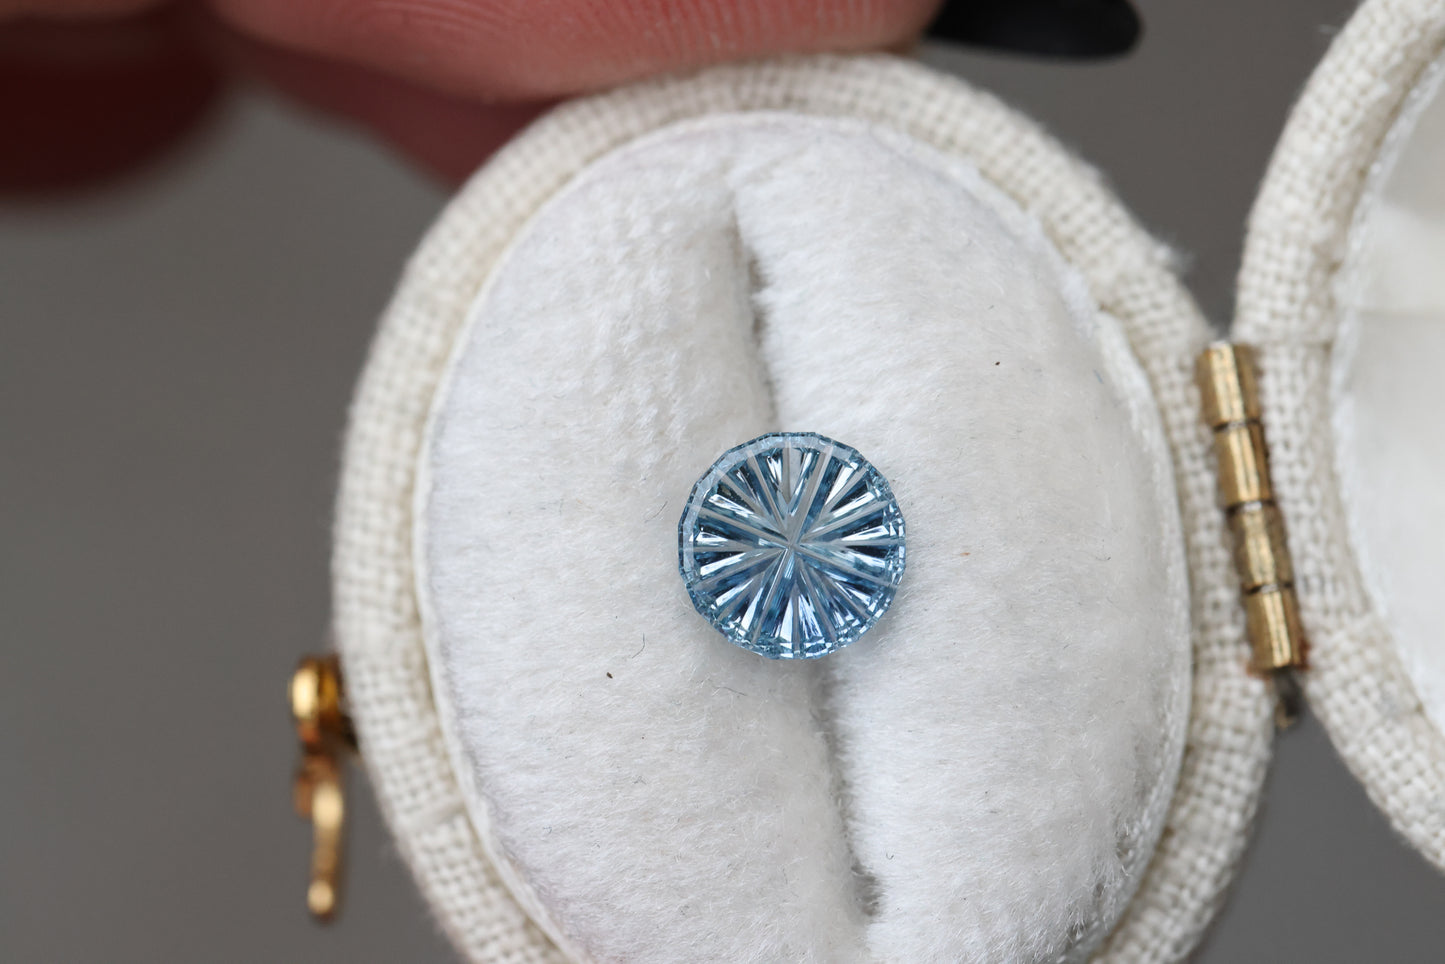 .92ct round light blue sapphire - Starbrite cut by John Dyer